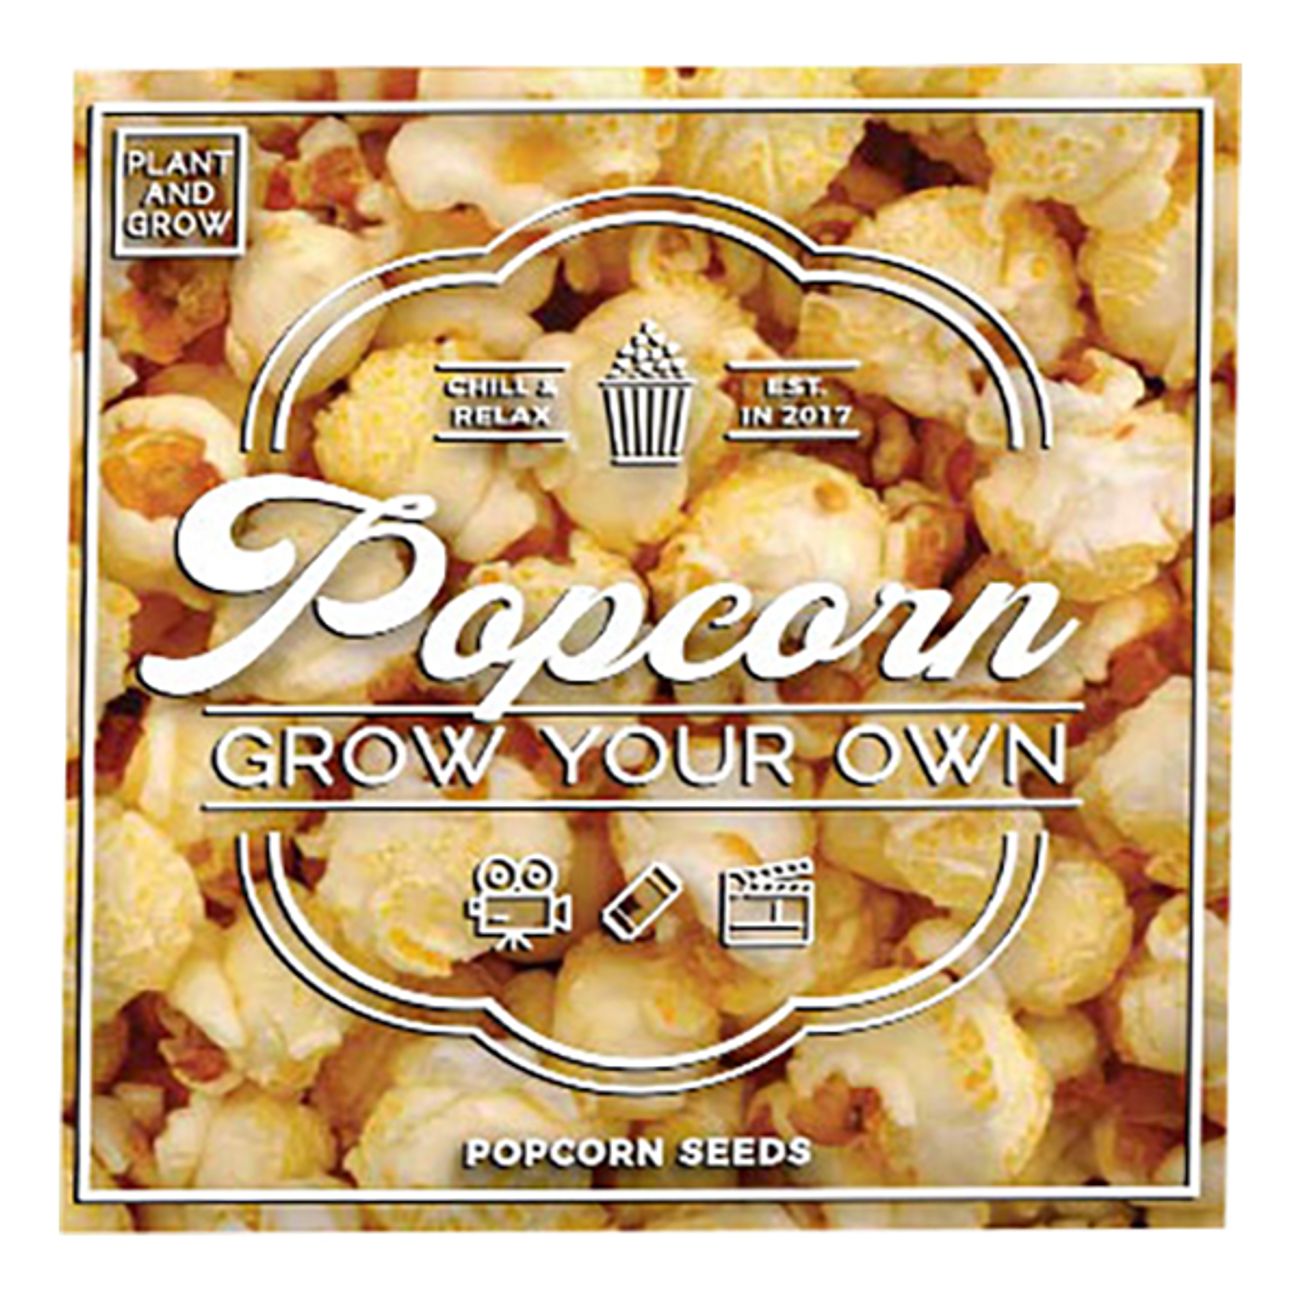 odla-dina-egna-popcorn-1